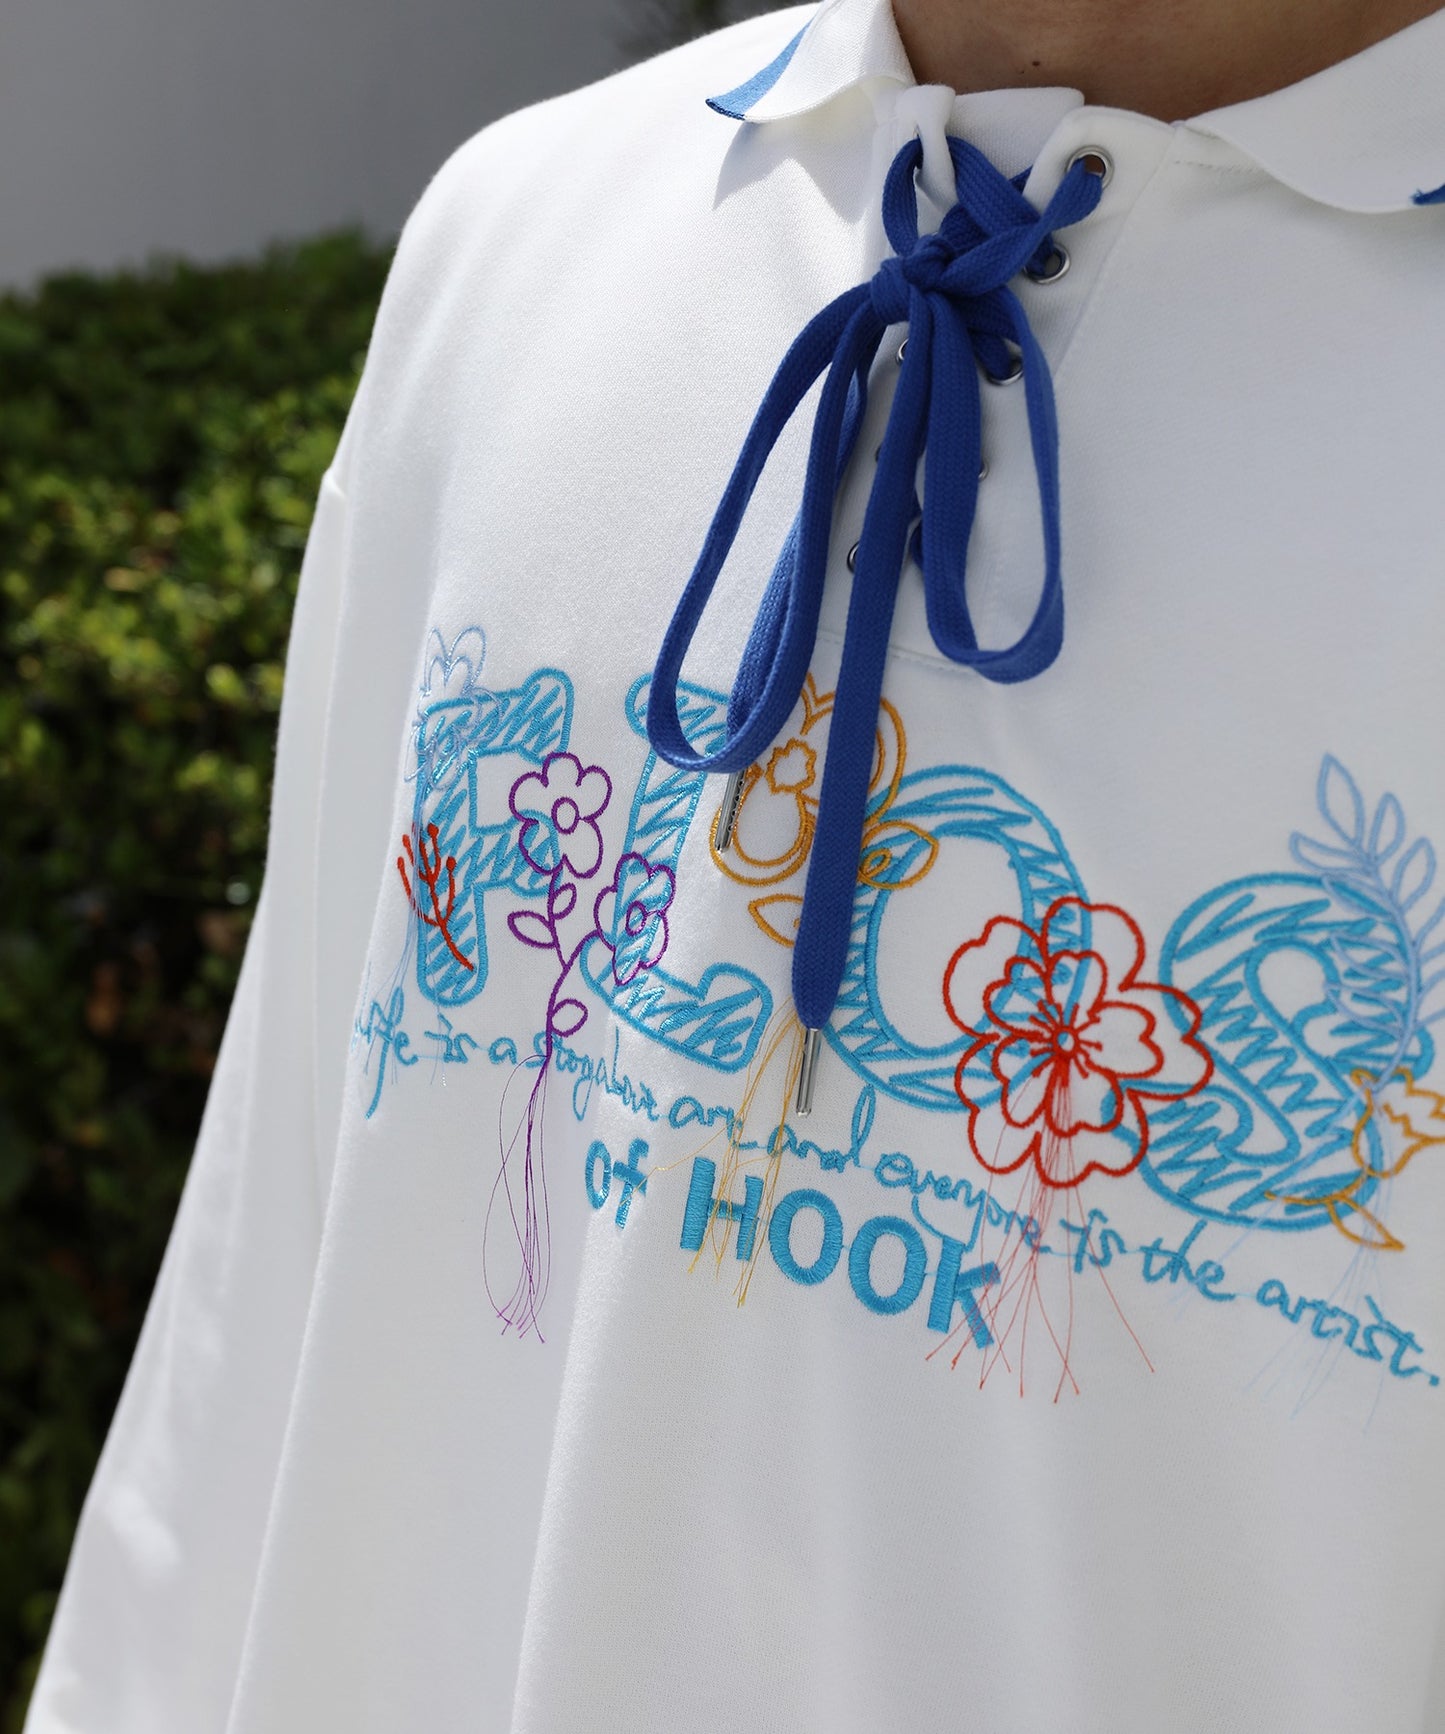 《 PRE ORDER 》【HOOK -original-】 古着風フリンジ刺繍編み上げポロ襟スウェット